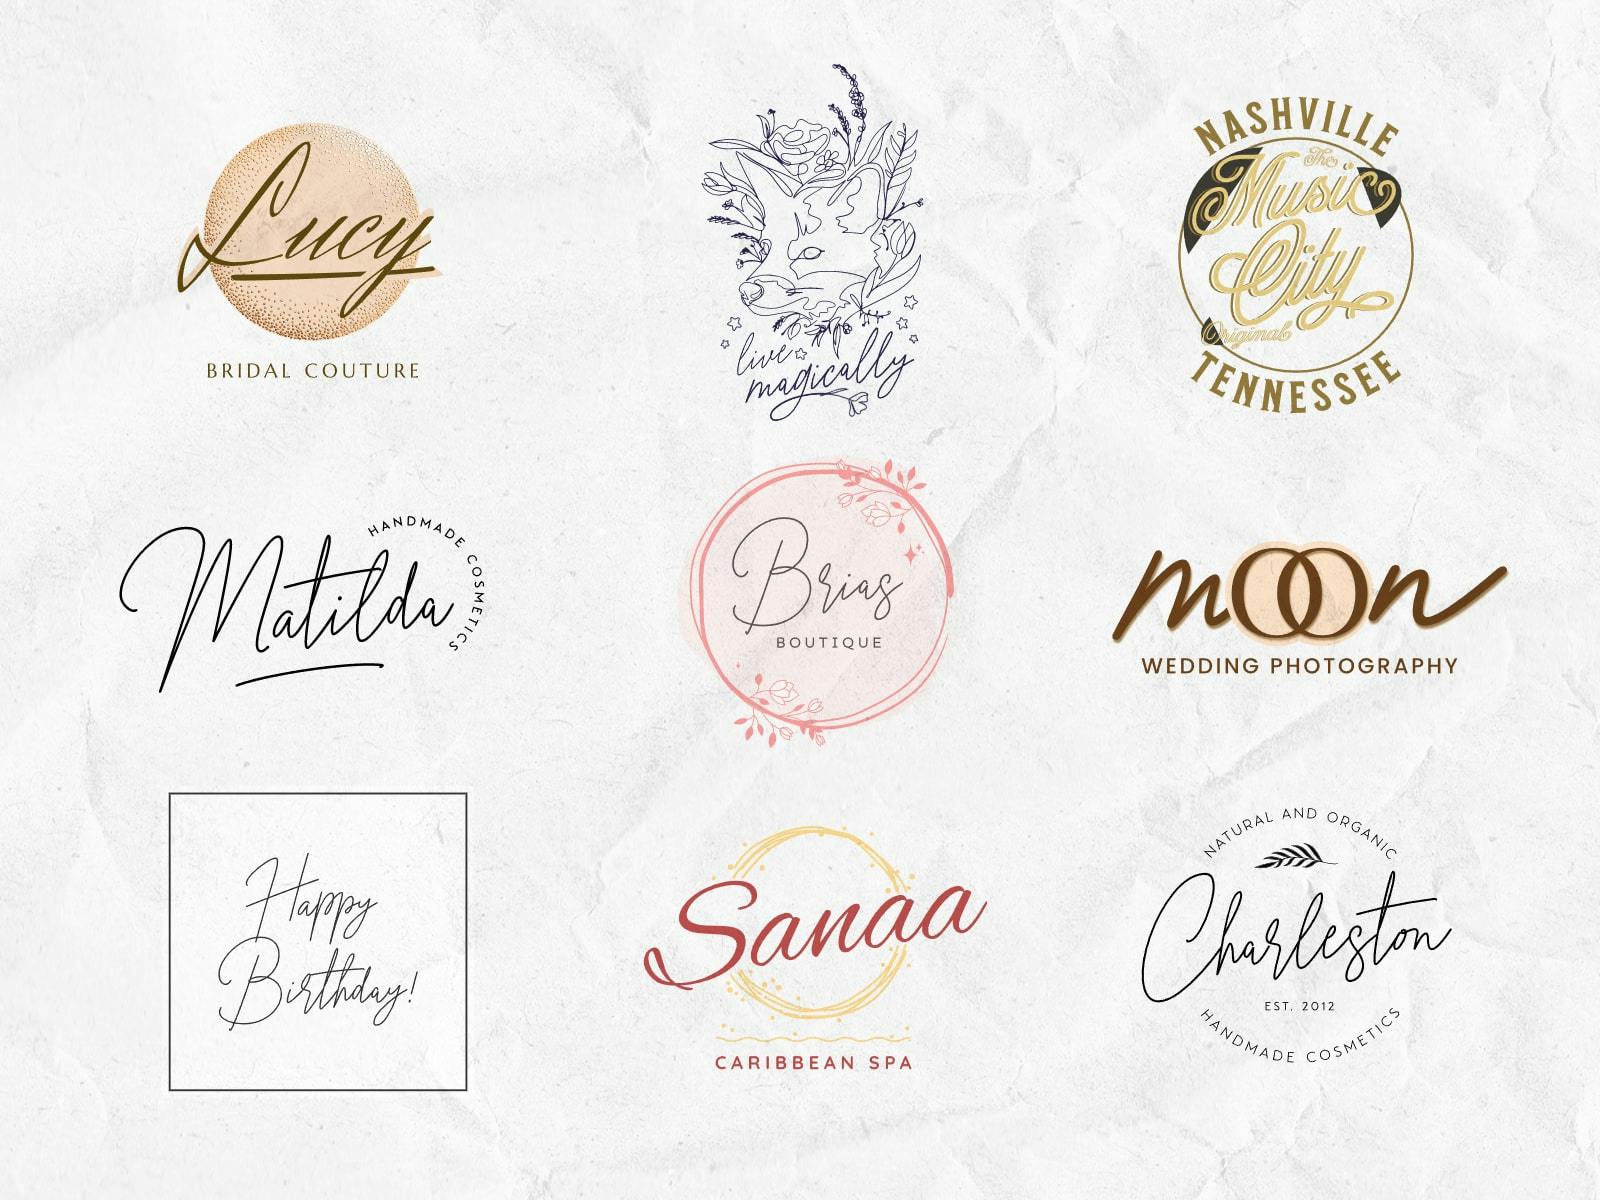 Handwritten Logo: Collection of handwritten logo designs